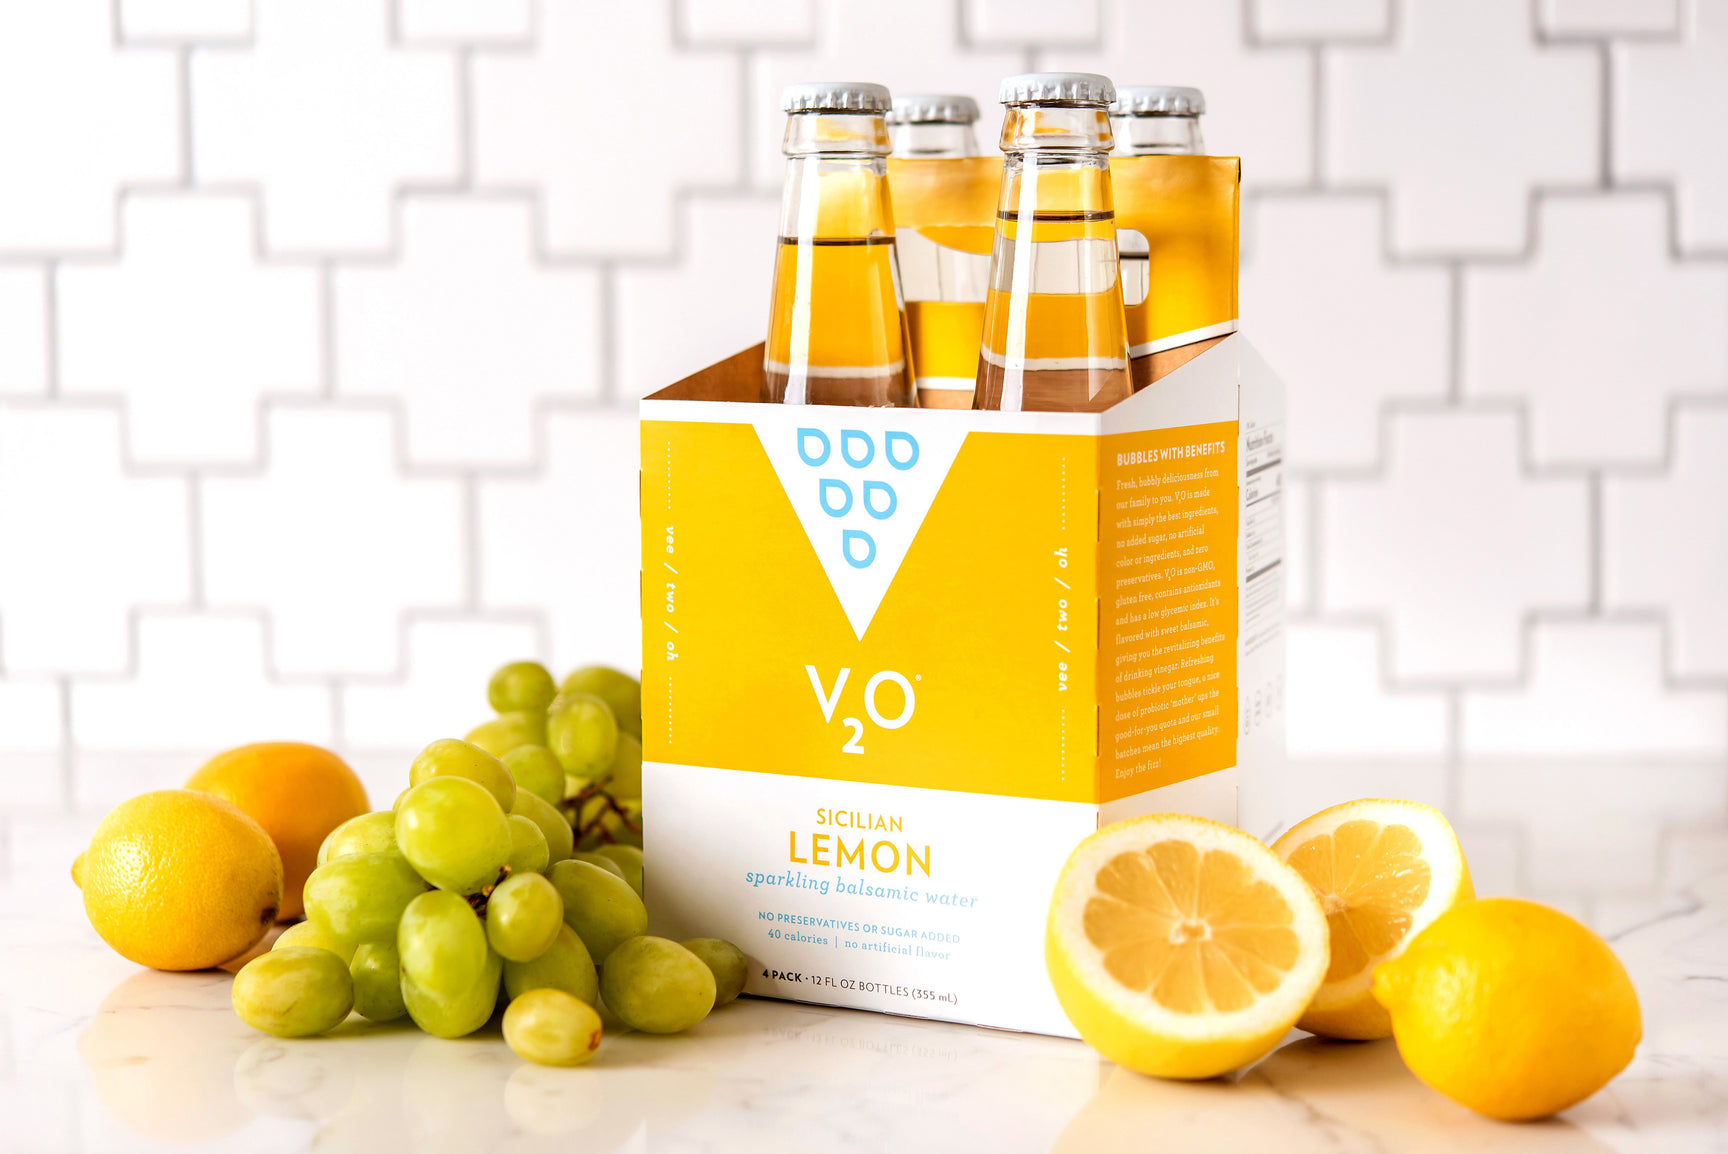 V2O Sicilian Lemon with lemons